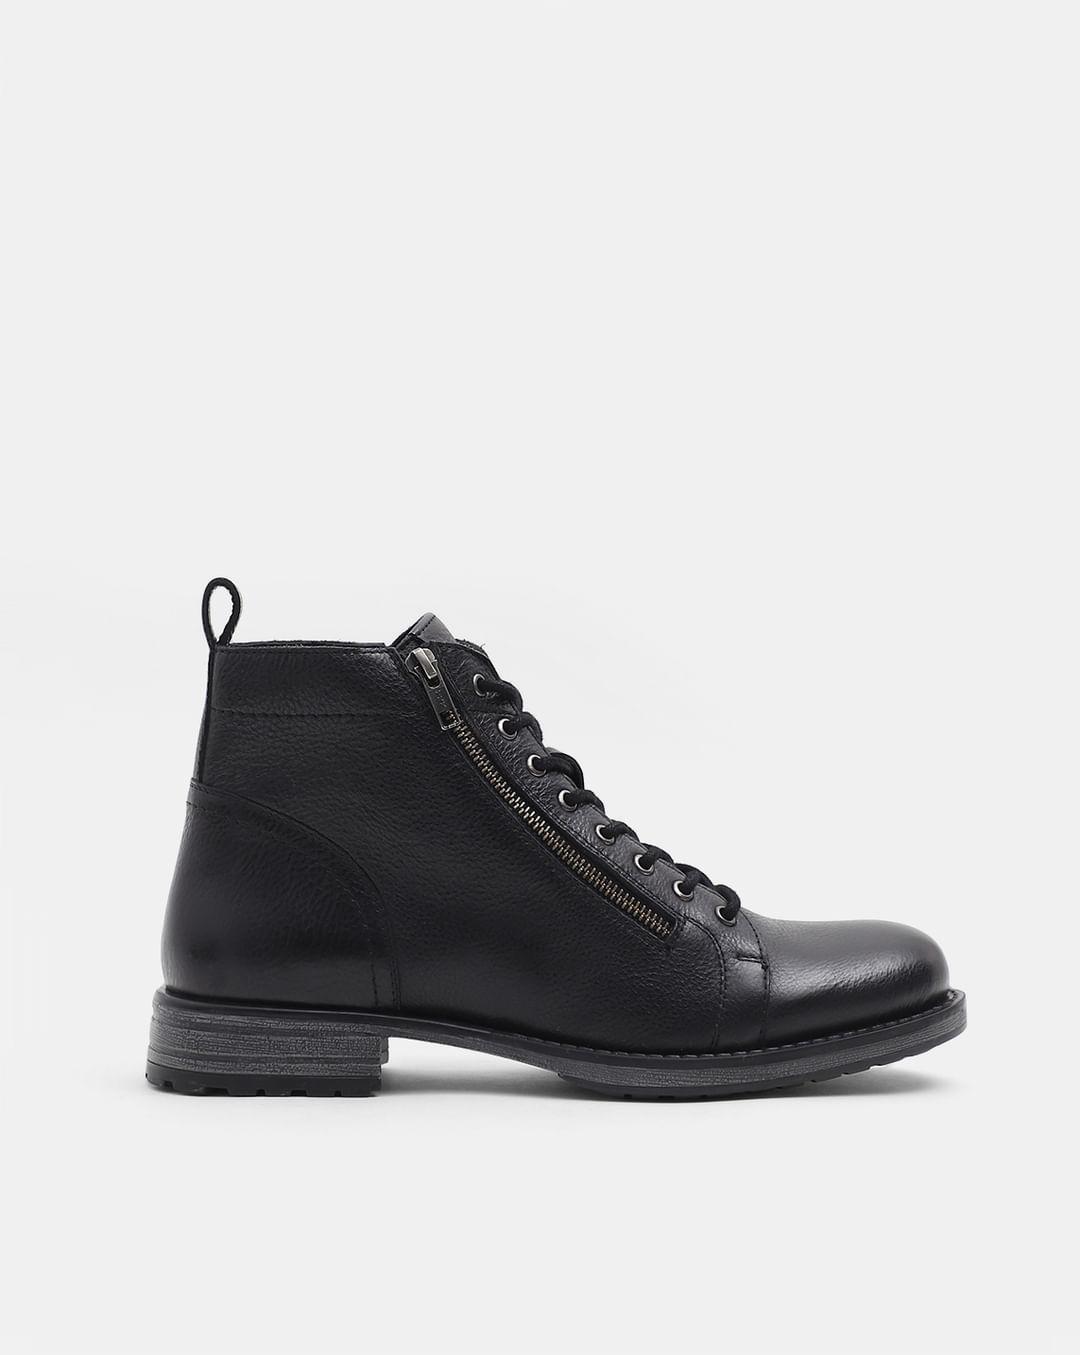 black mid-top premium leather boots